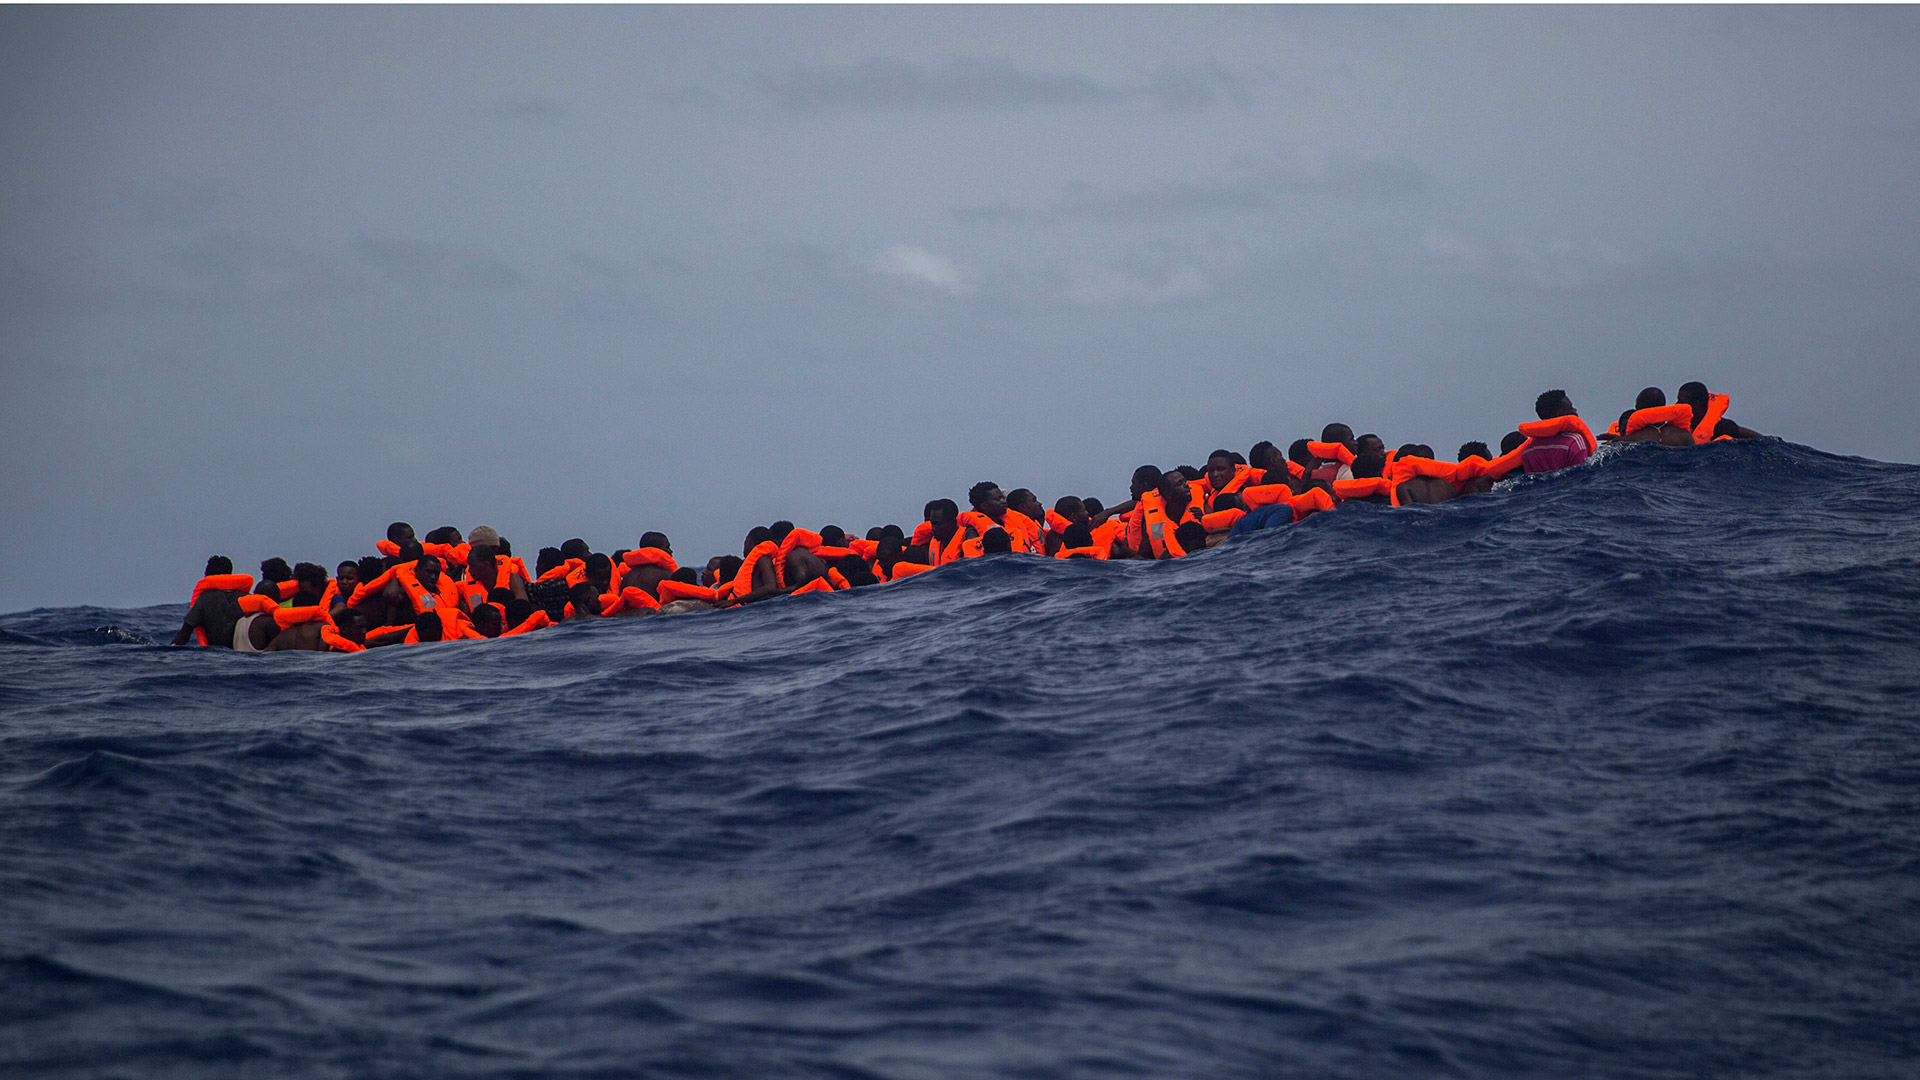 Mas de 100 desaparecidos frente a las costas de Libia tras un naufragio